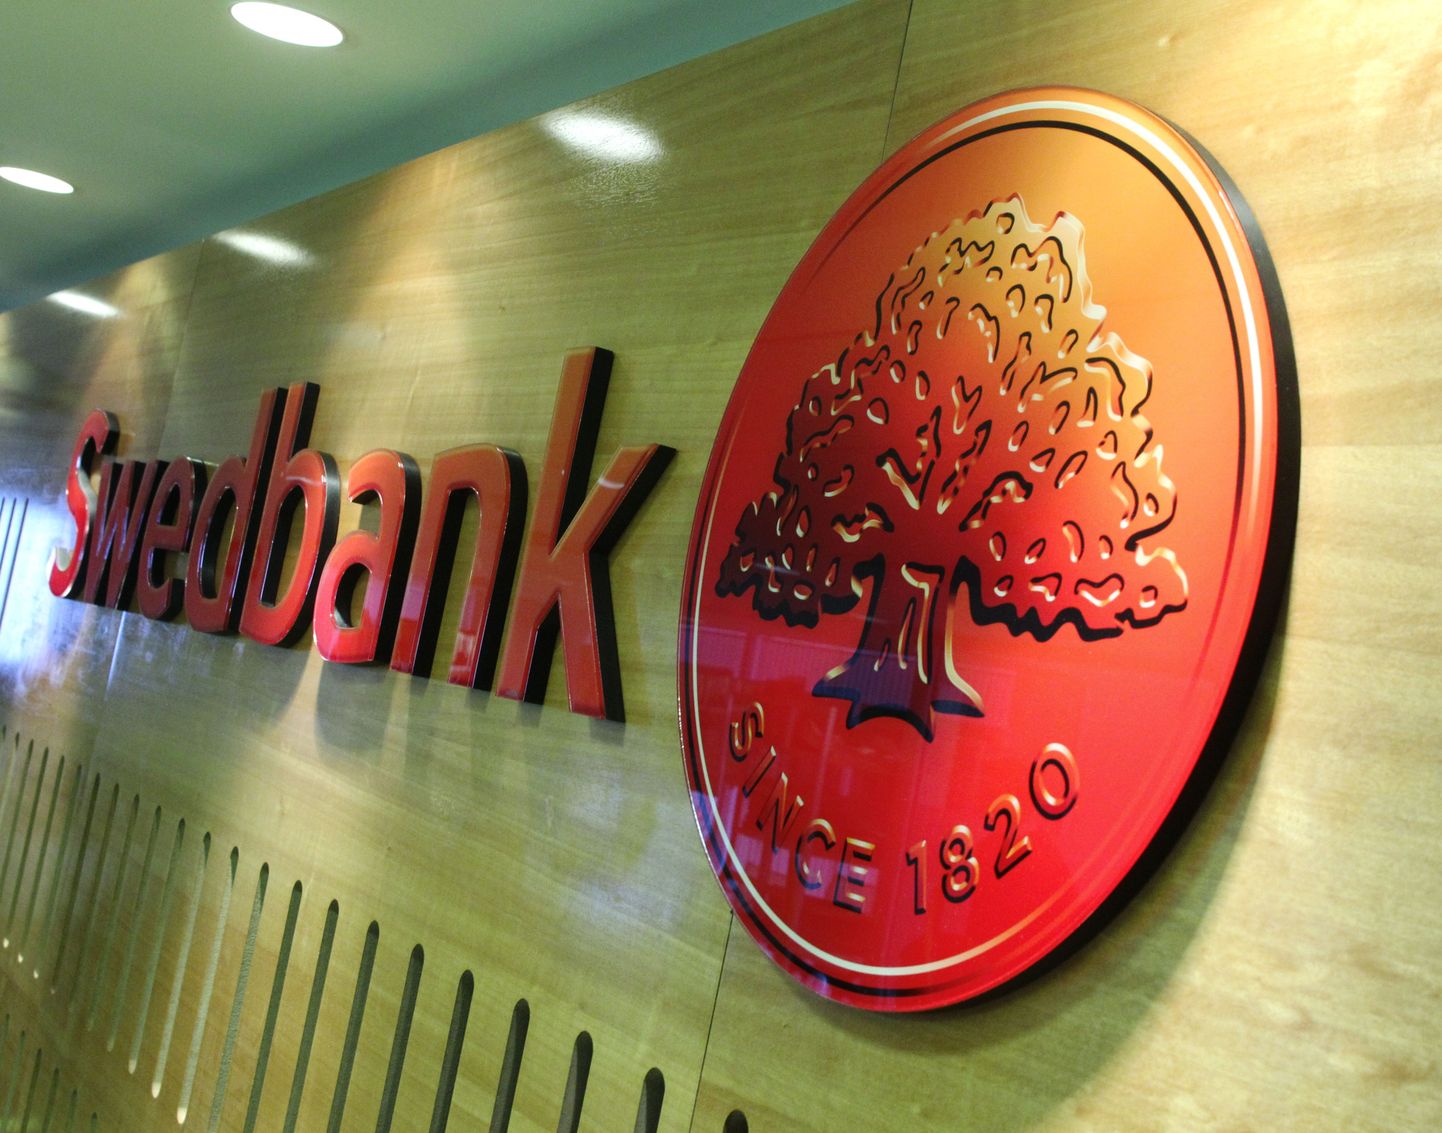 Eesti suurim pank on Swedbank AS.